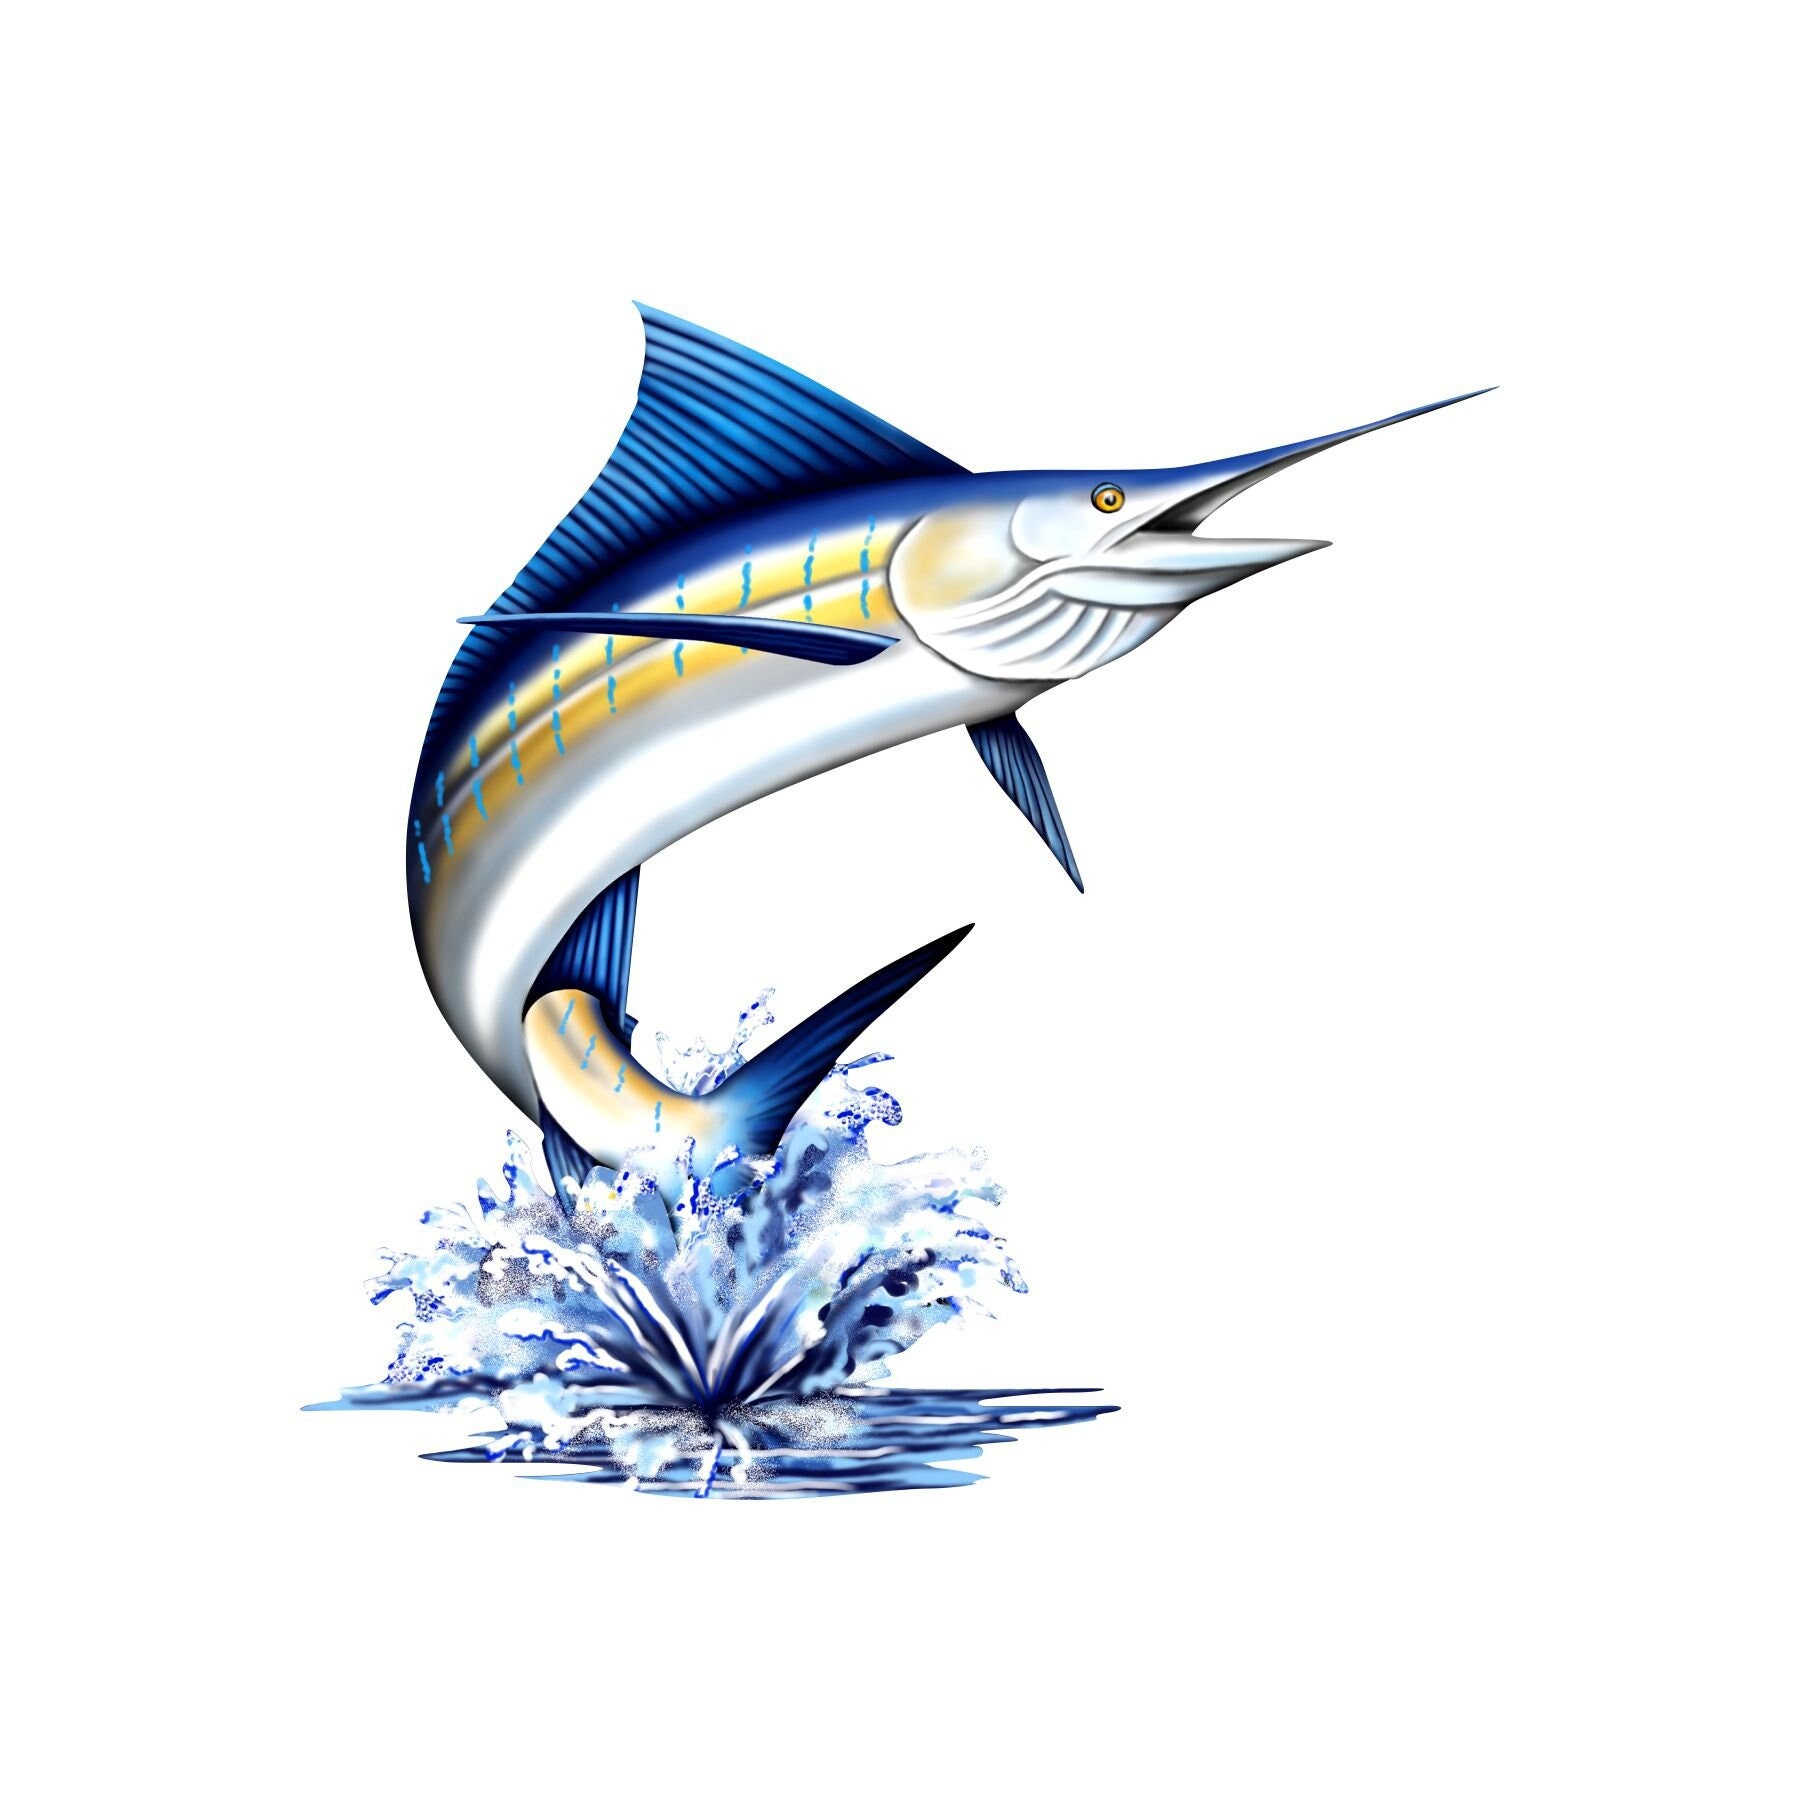 Marlin fishing decal, full color Marlin fish decal, fishing car decal,  Marlin boat decal, fishing window sticker, vibrant bass fishing logo